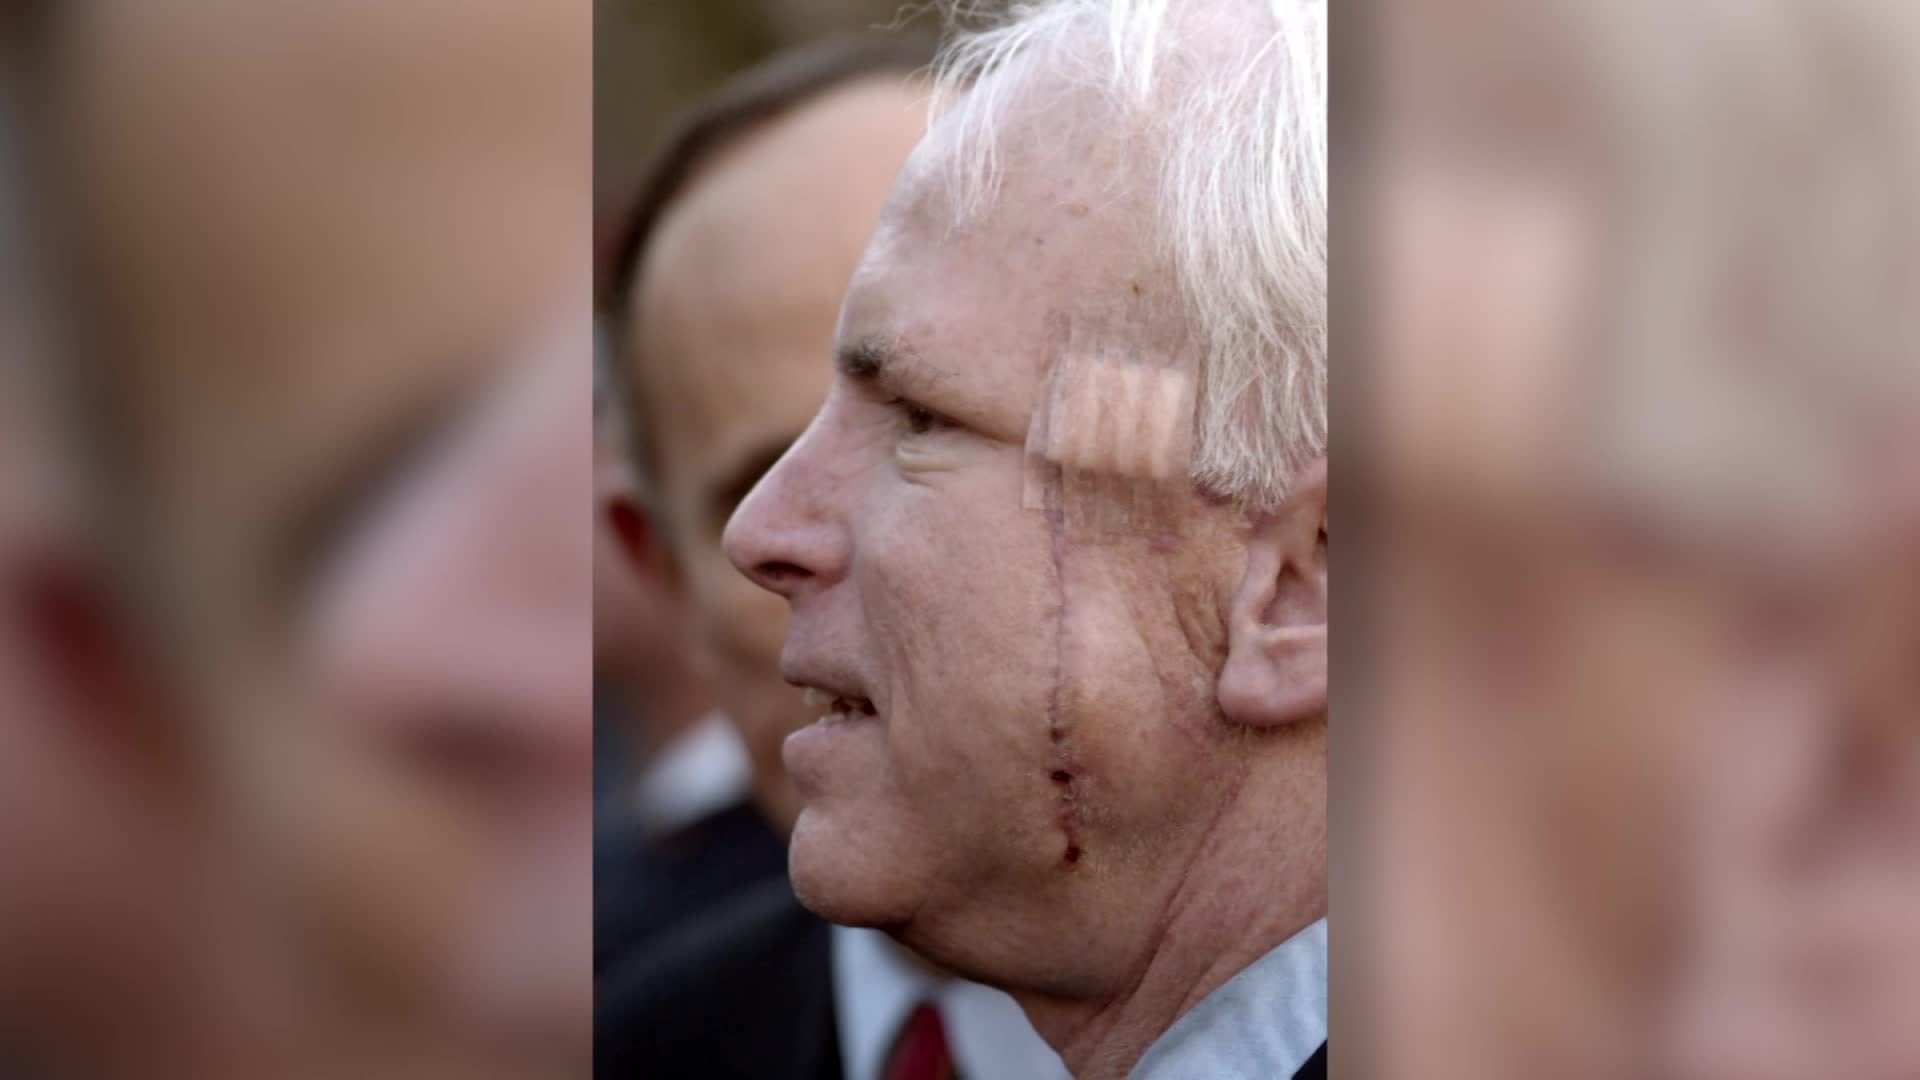 Sen. John McCain has brain cancer, aggressive tumor surgically removed | CNN